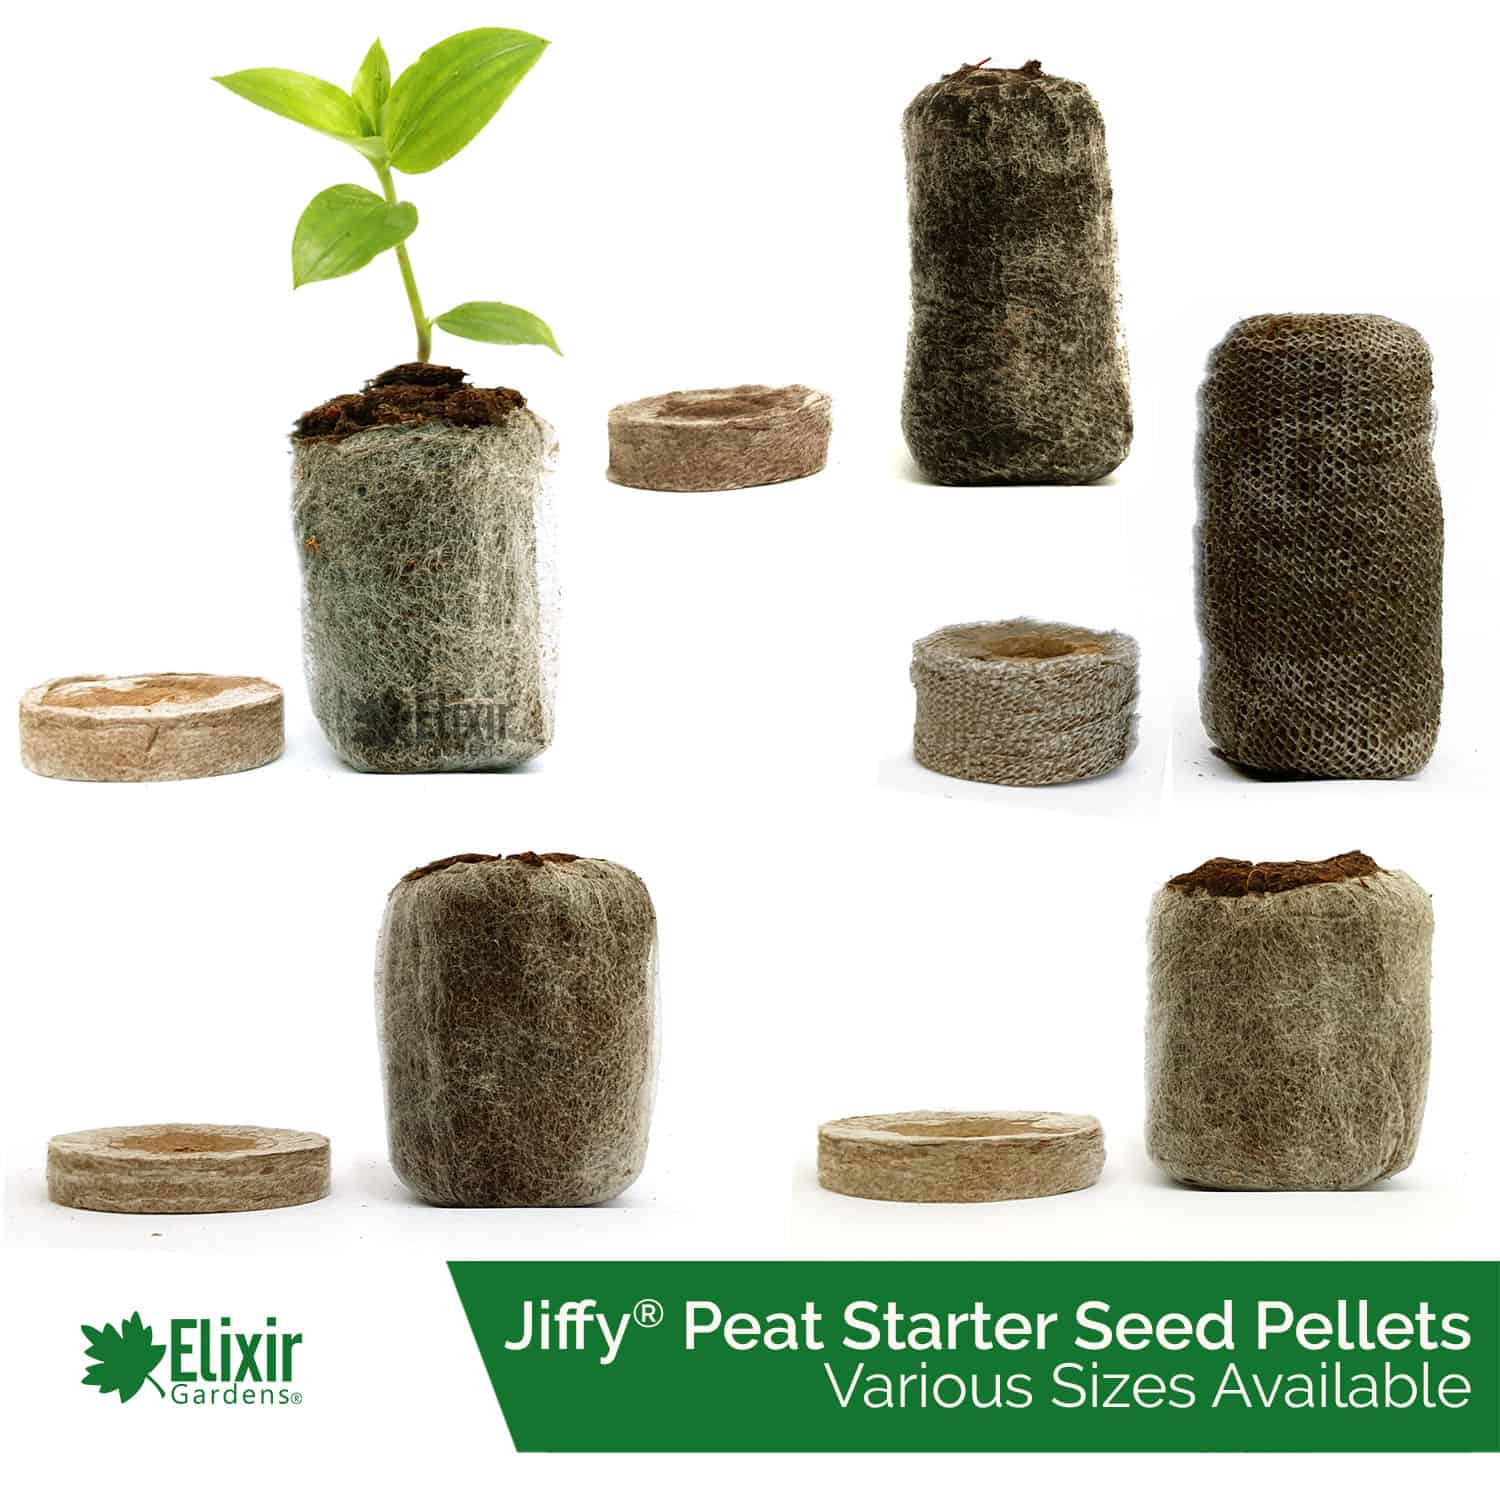 Jiffy 7 Peat Pellets 42 mm Seed Starting Plugs Growing Media #703-1000 Count 